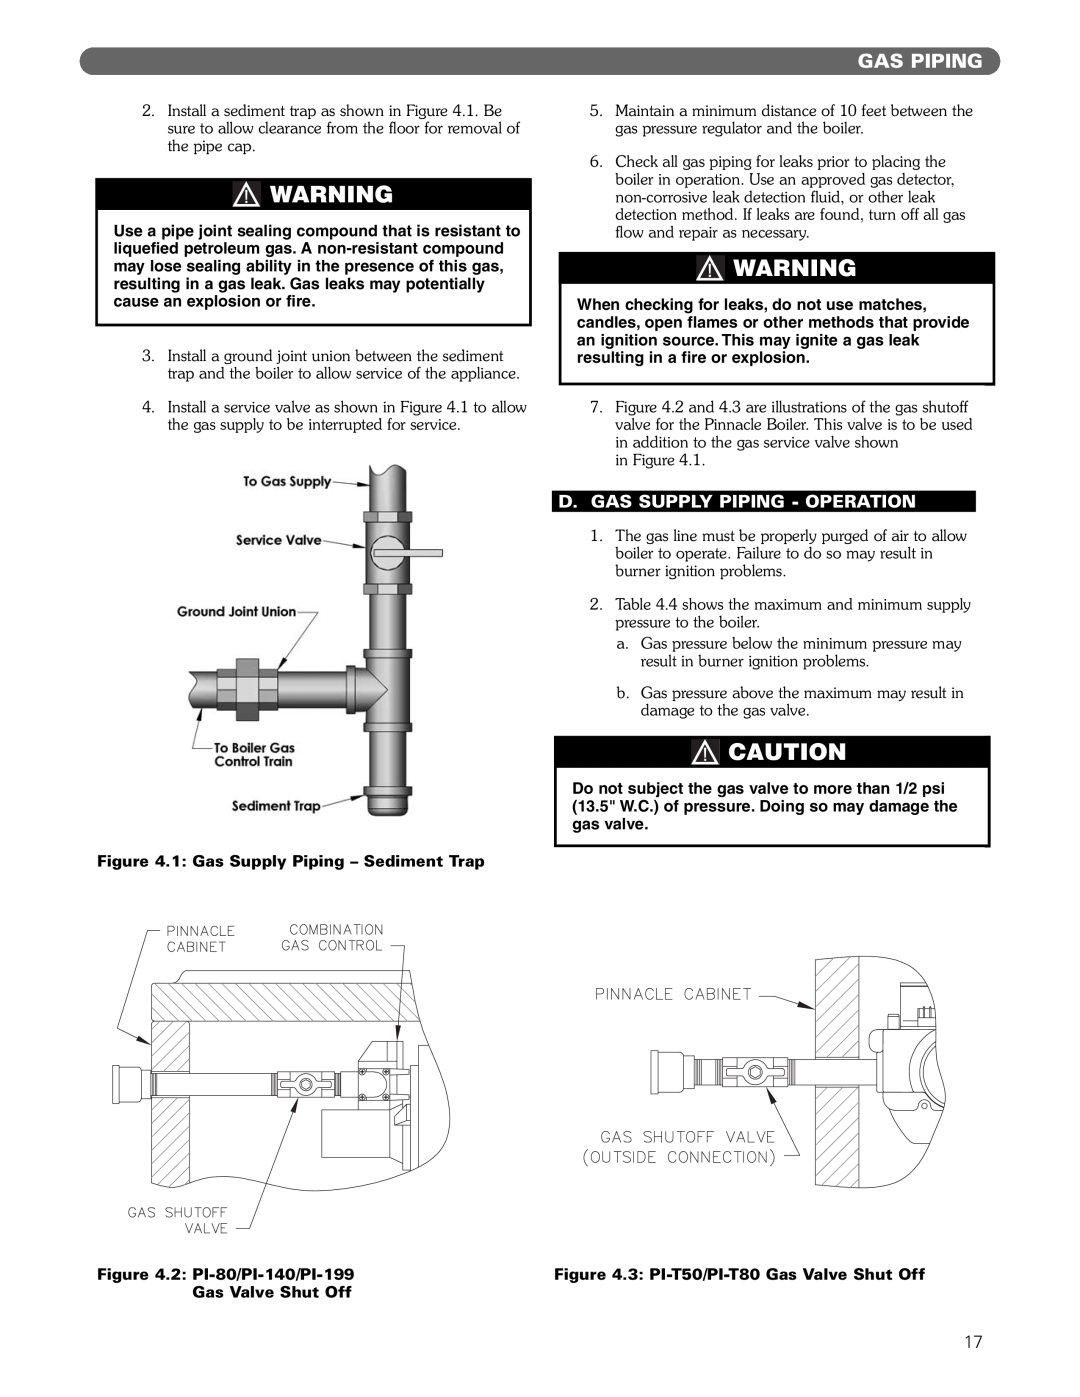 PB Heat Gas Boiler Gas Piping, D.Gas Supply Piping - Operation, 1 Gas Supply Piping - Sediment Trap, 2 PI-80/PI-140/PI-199 